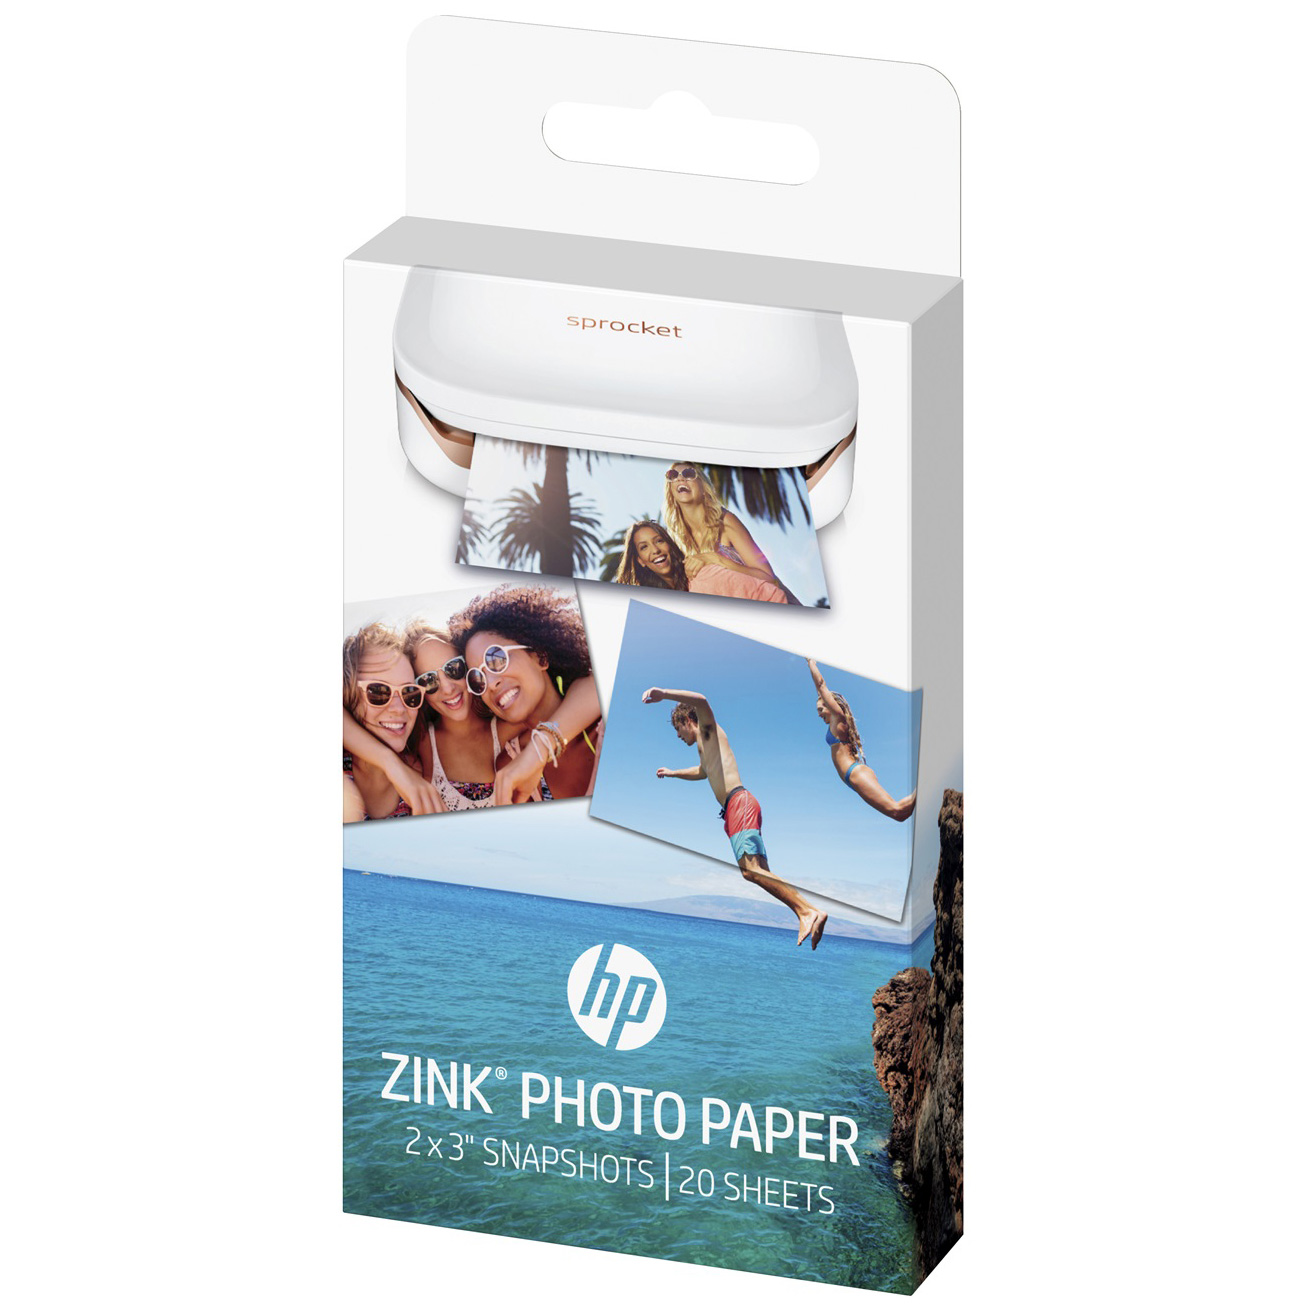 Original HP ZINK Sticky-backed 2x3inch Photo Paper - 20 Sheet Pack (W4Z13A)